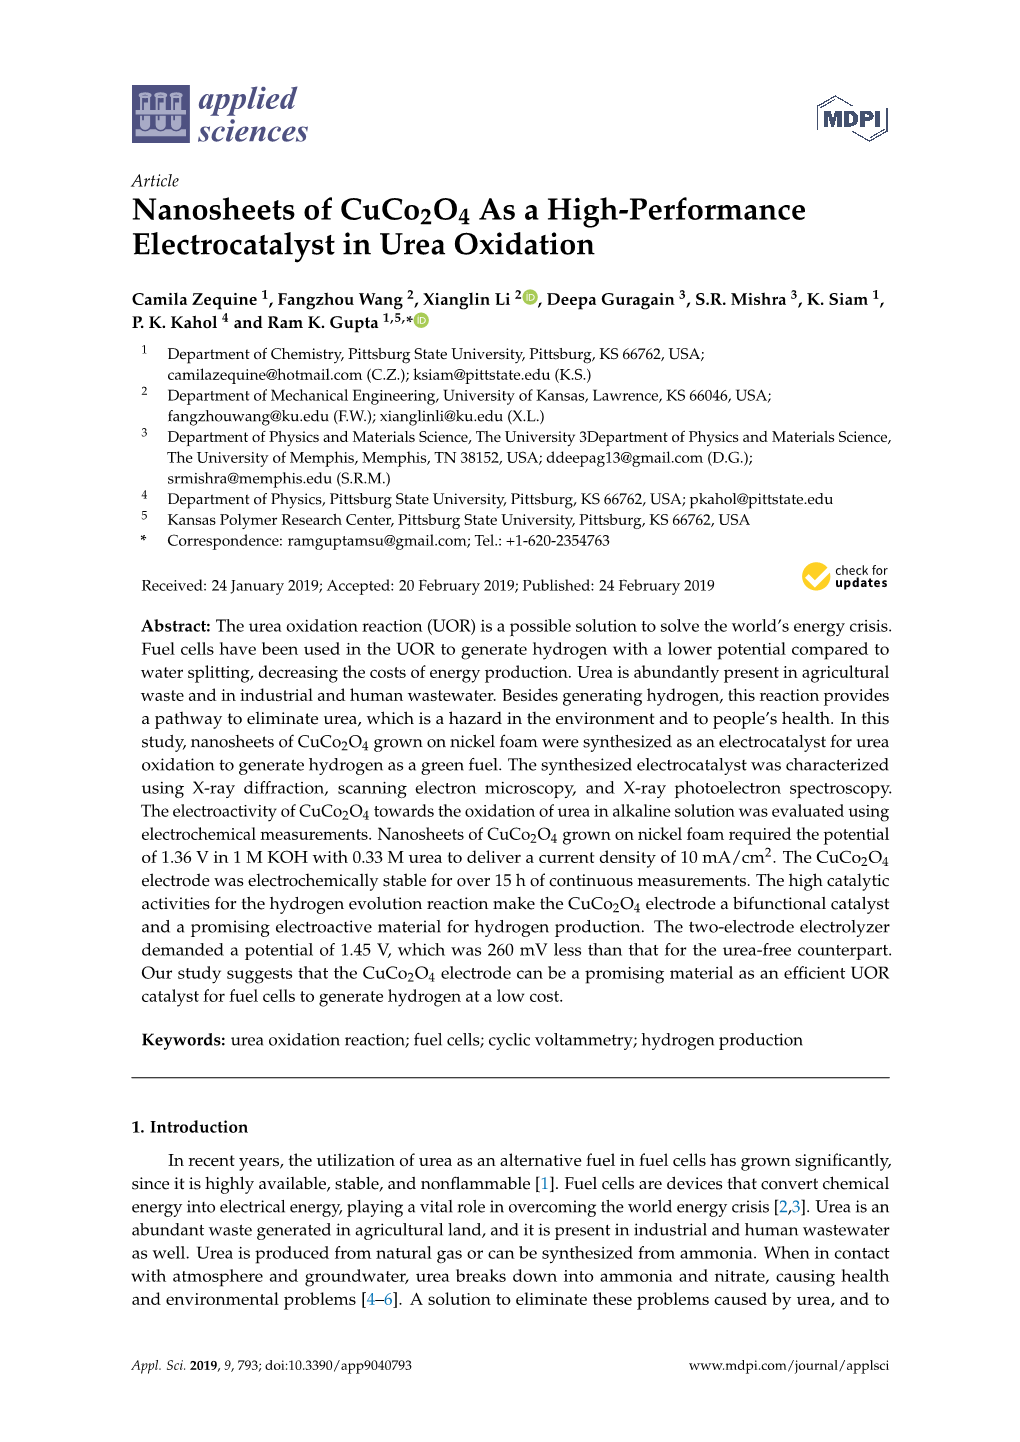 Nanosheets of Cuco2o4 As a High-Performance Electrocatalyst in Urea Oxidation